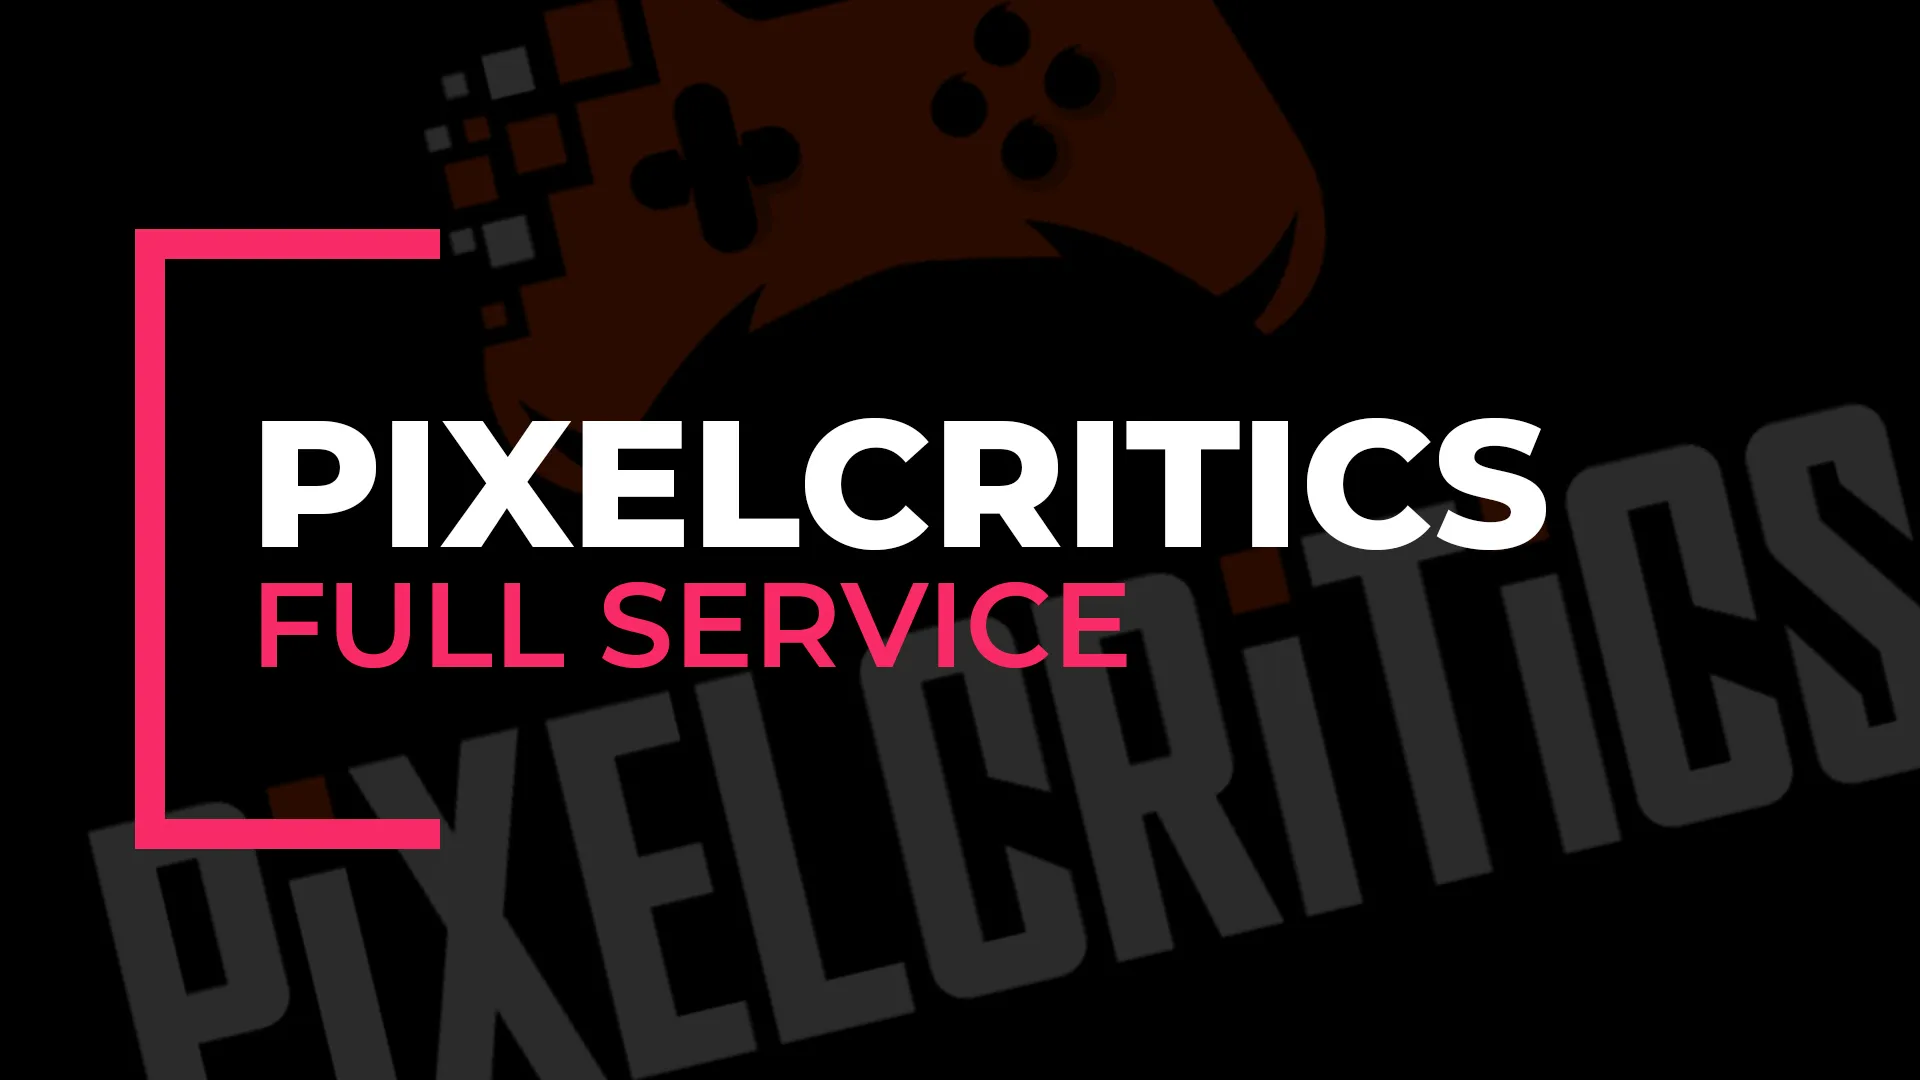 Full Service | PIXELCRITICS